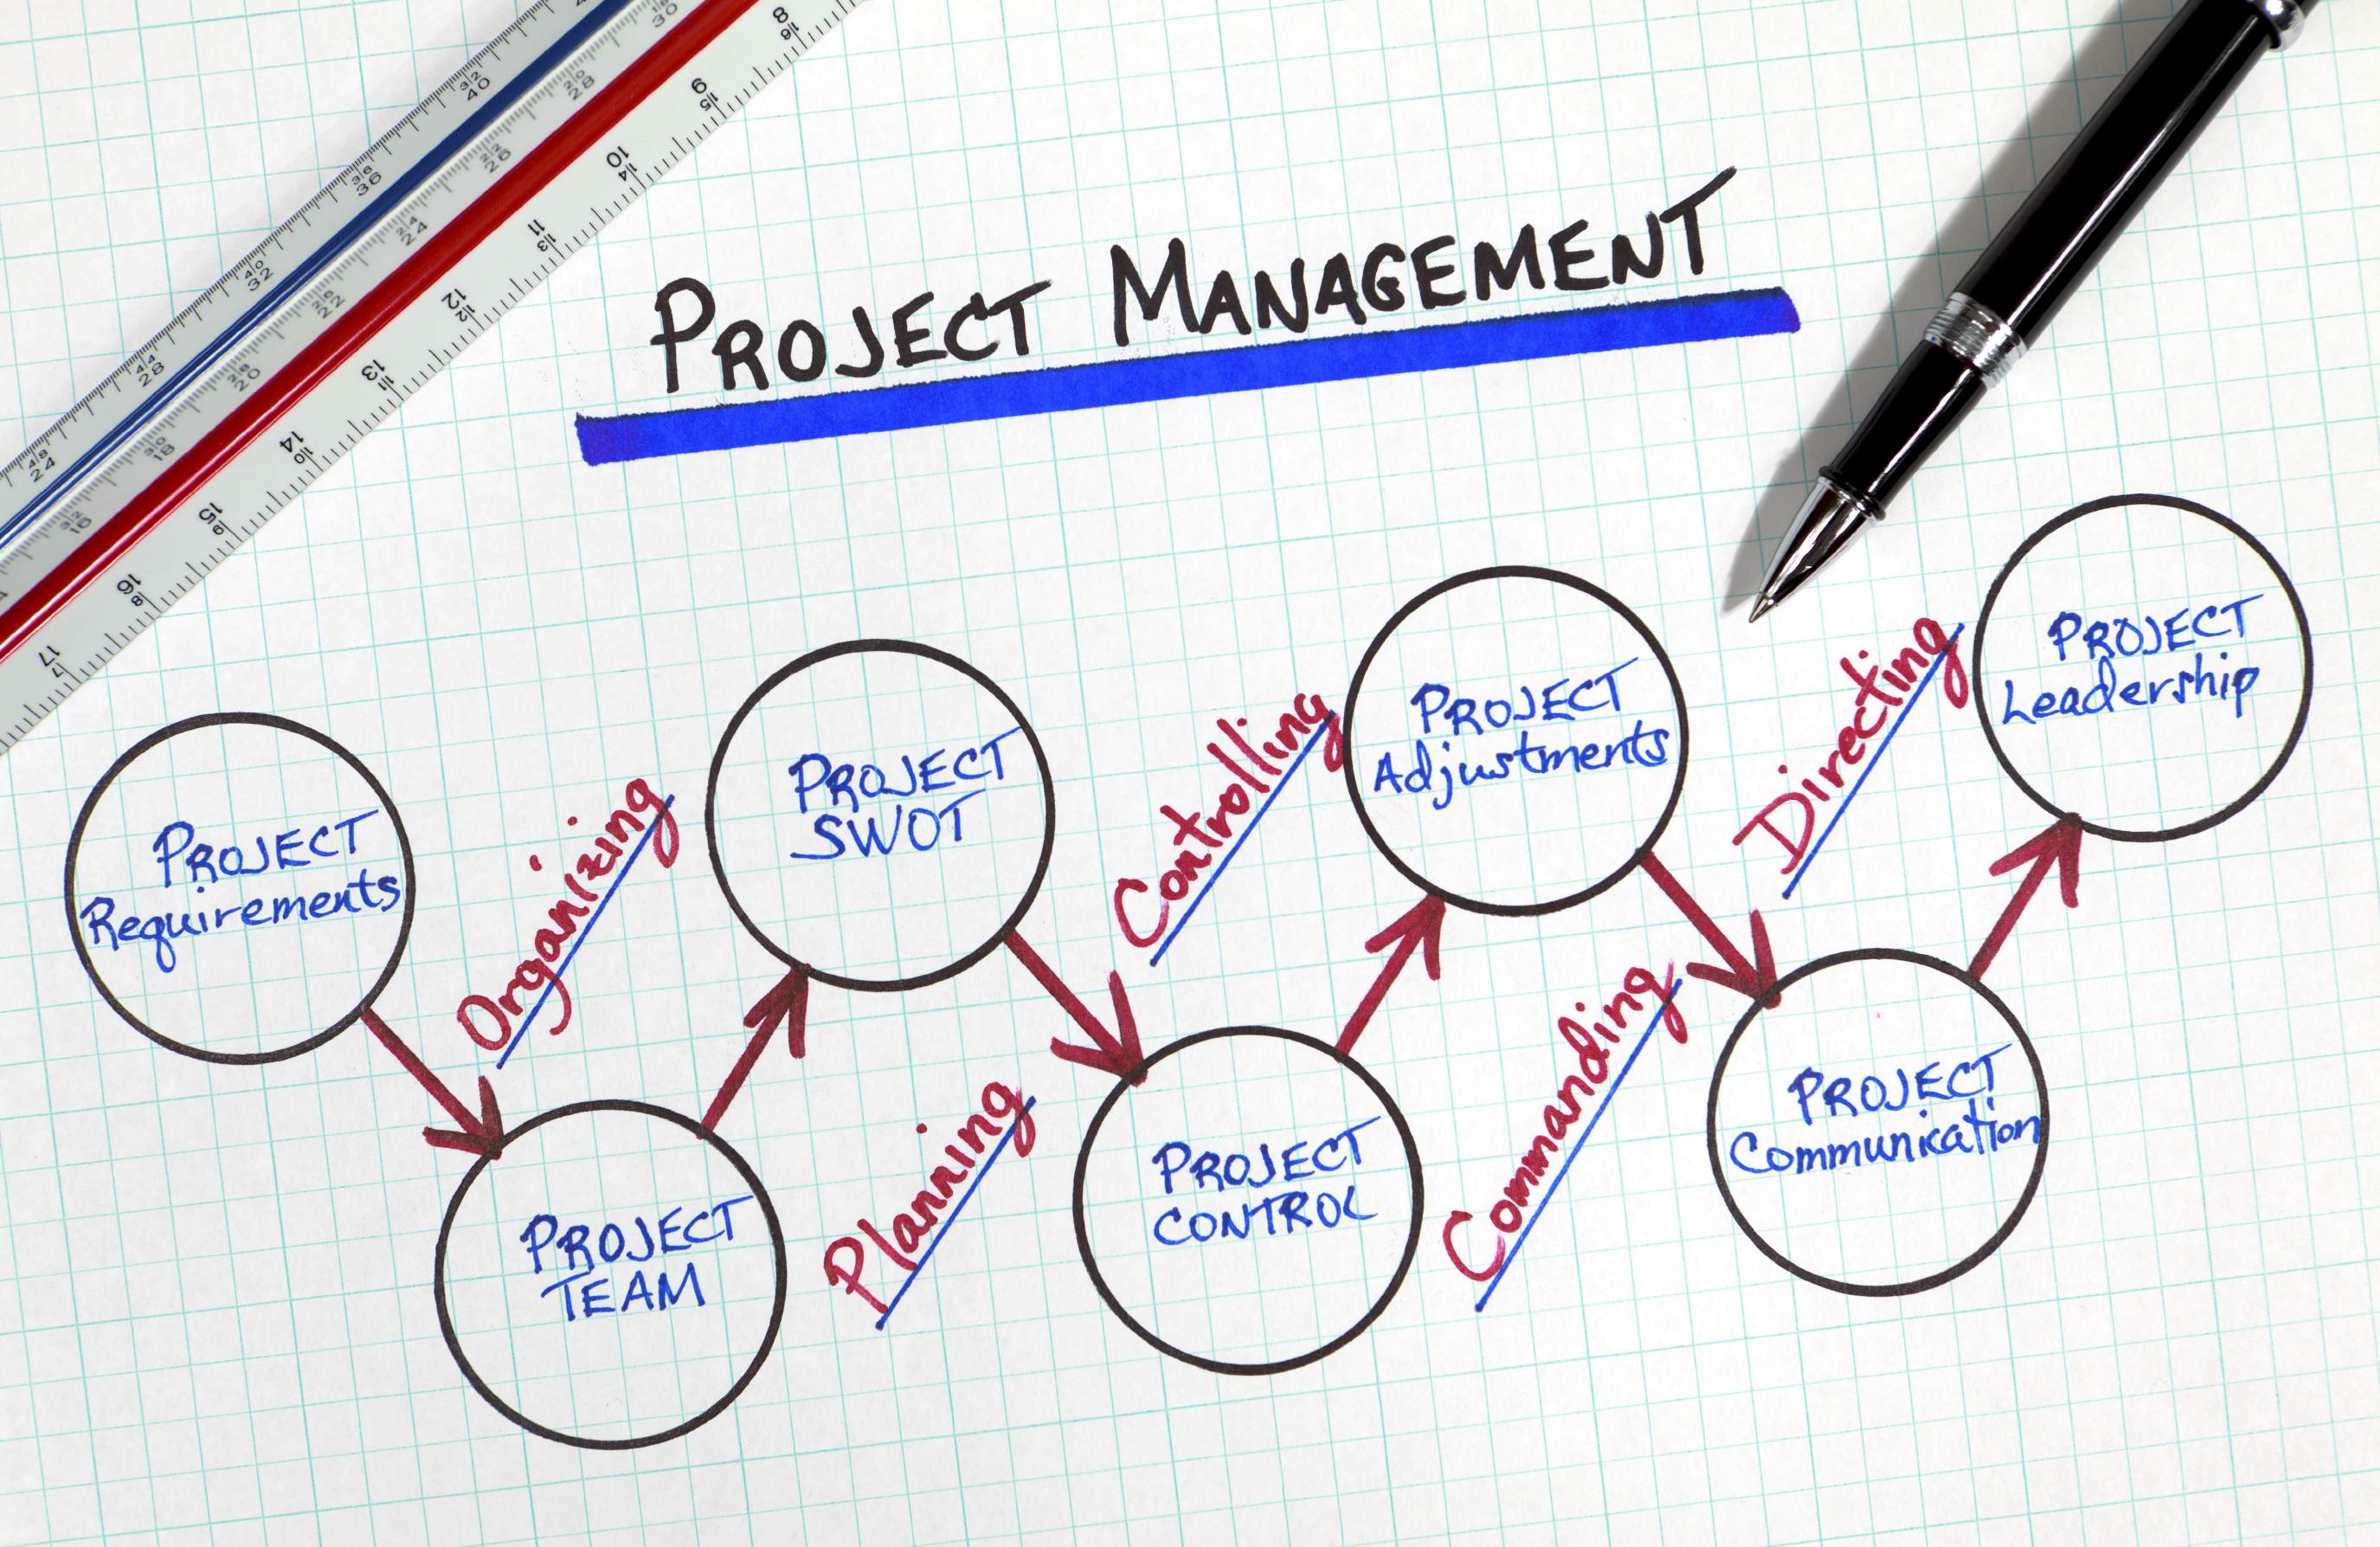 Проектов topic. Project Management. Проект менеджмент. Управление проектами. Управление проектами картинки.